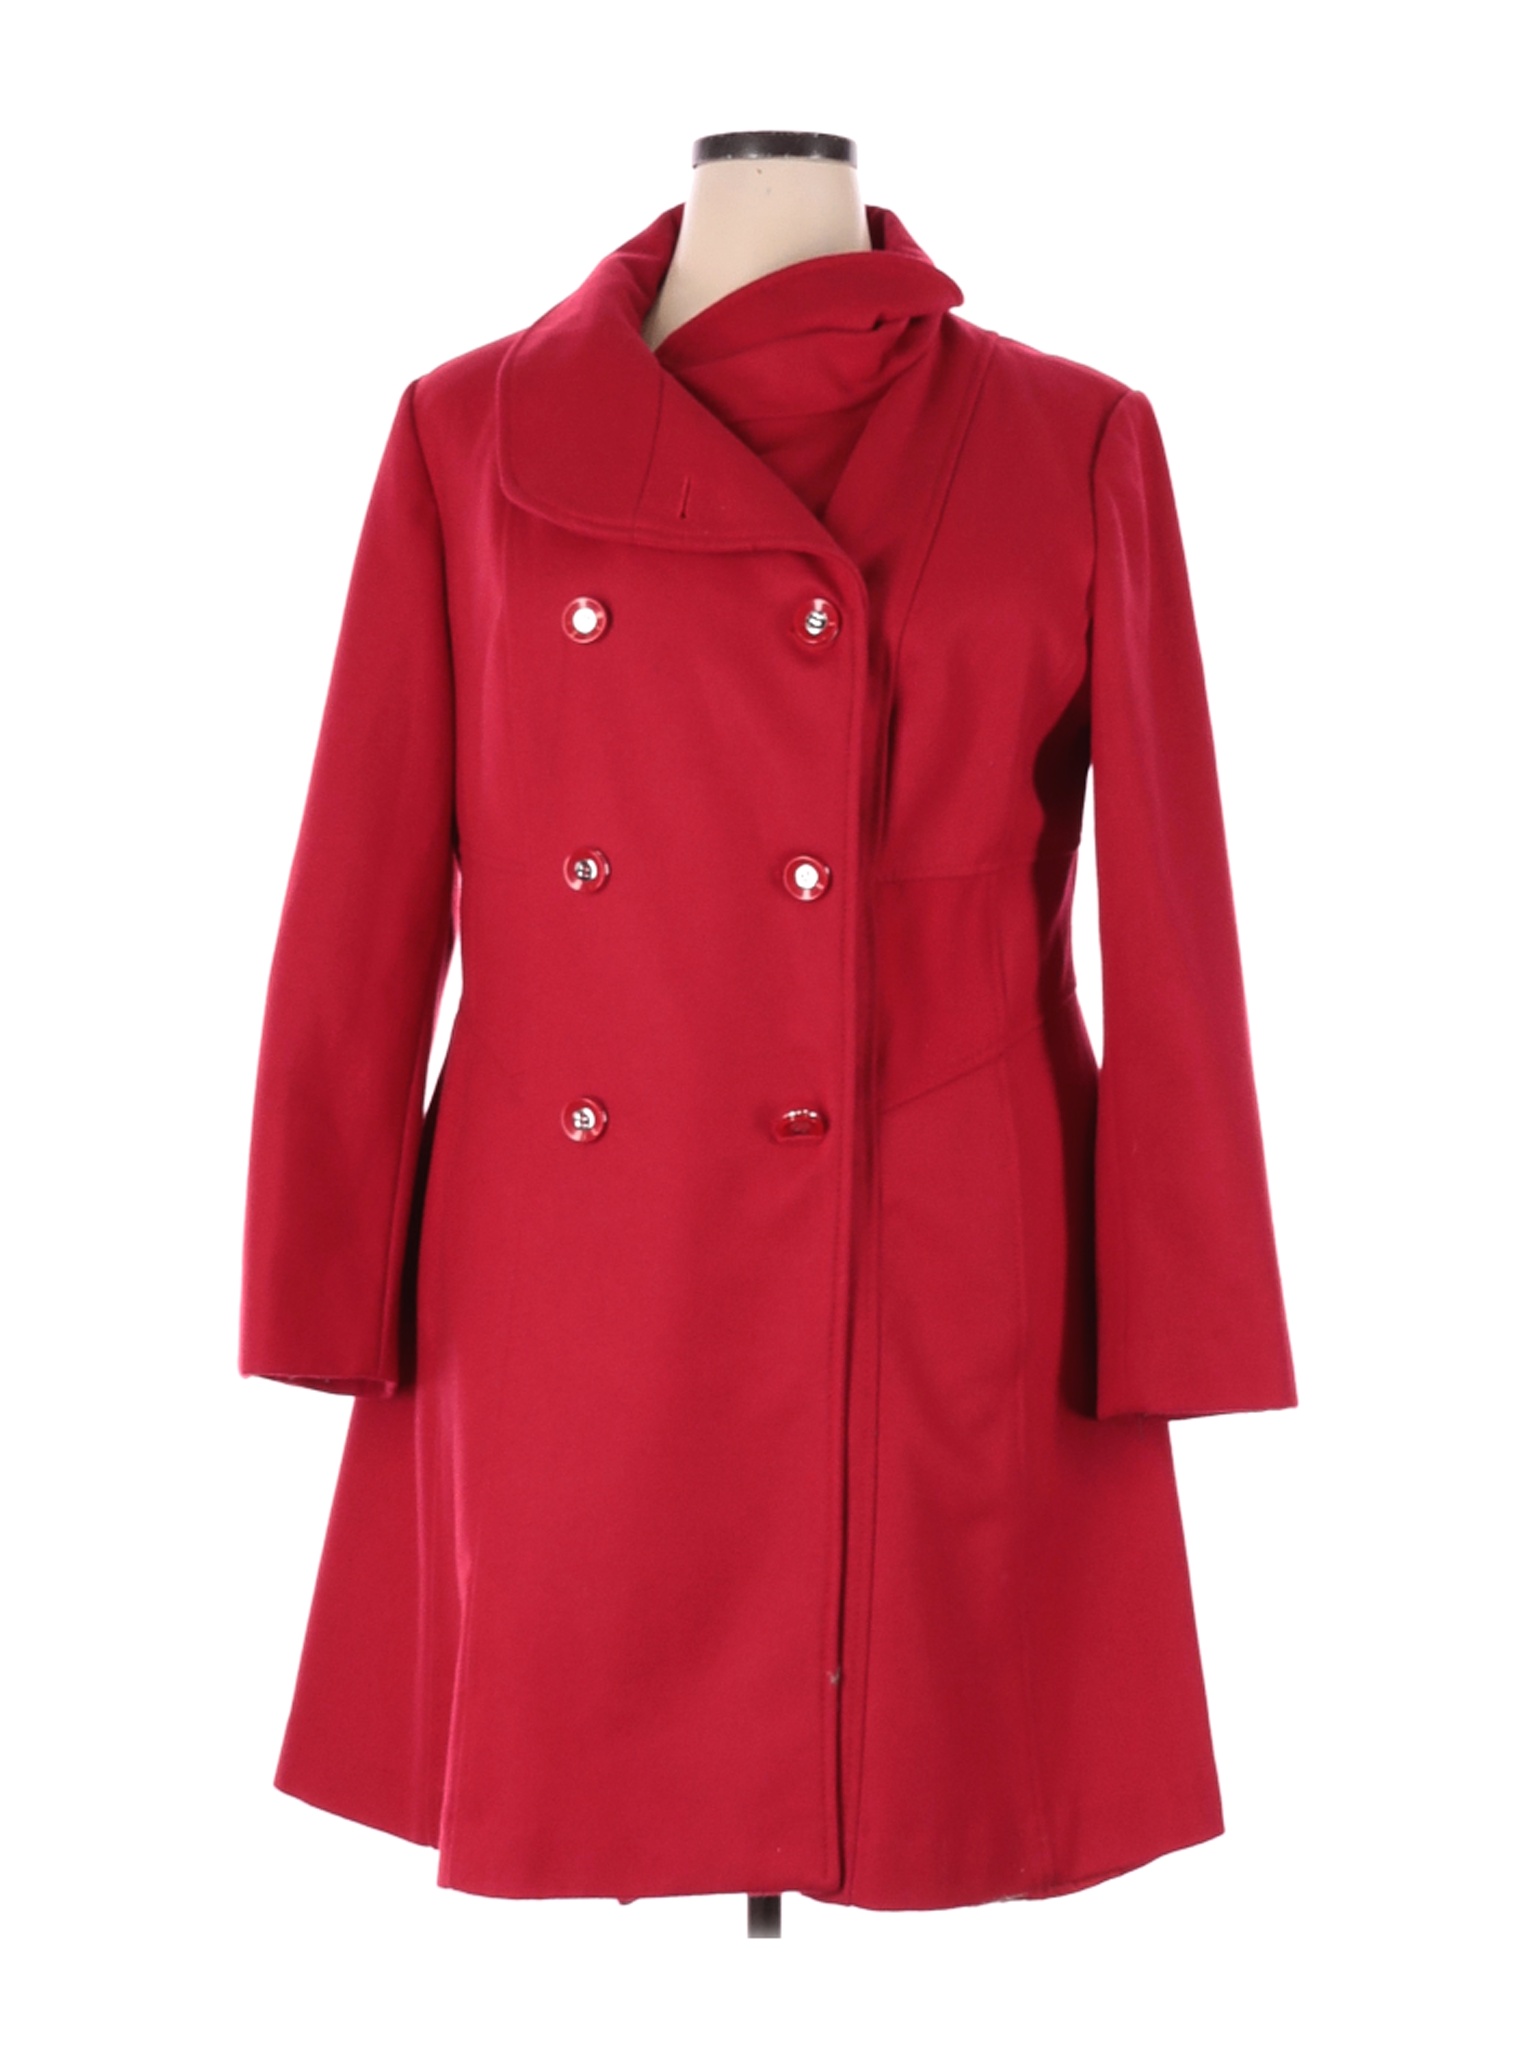 Jessica Simpson Women Red Wool Coat 1X Plus | eBay